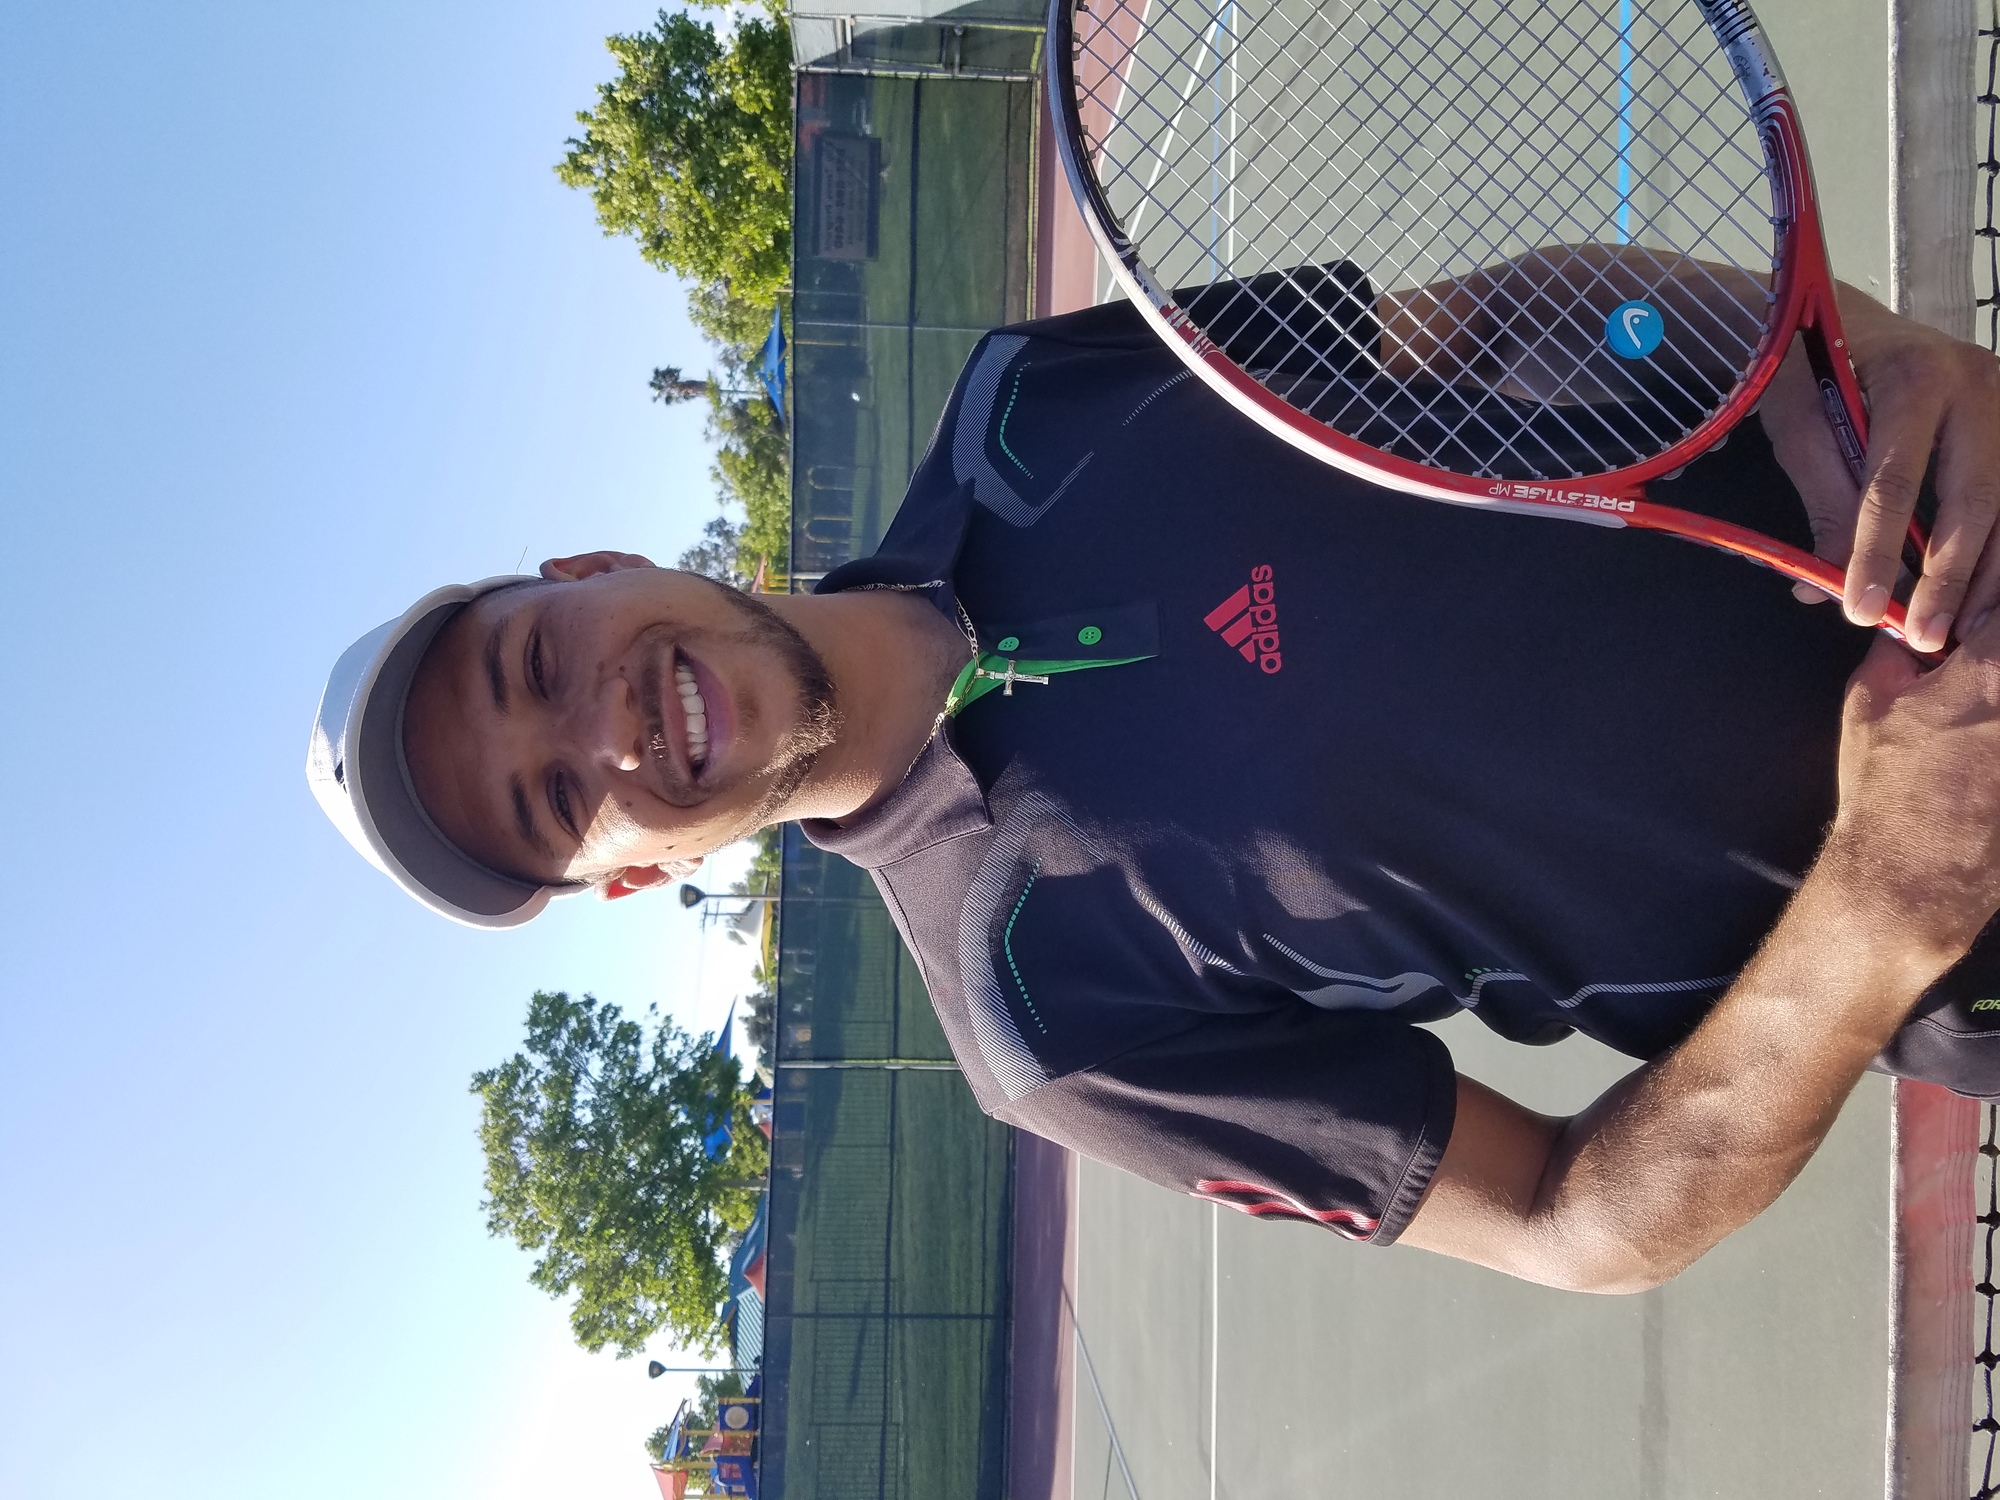 Peter D. teaches tennis lessons in Perris, CA